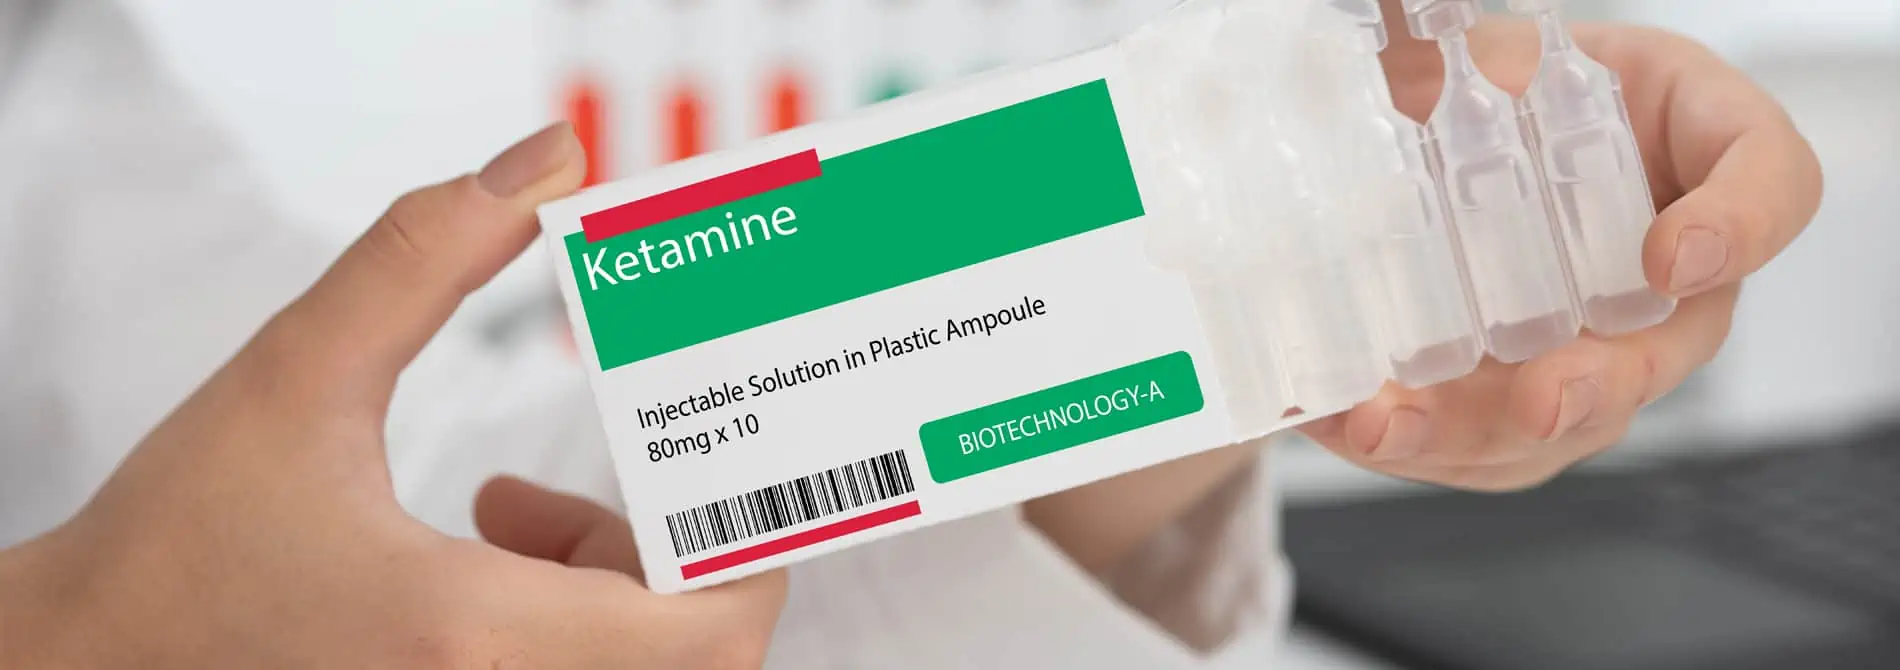 Dangers of Ketamine